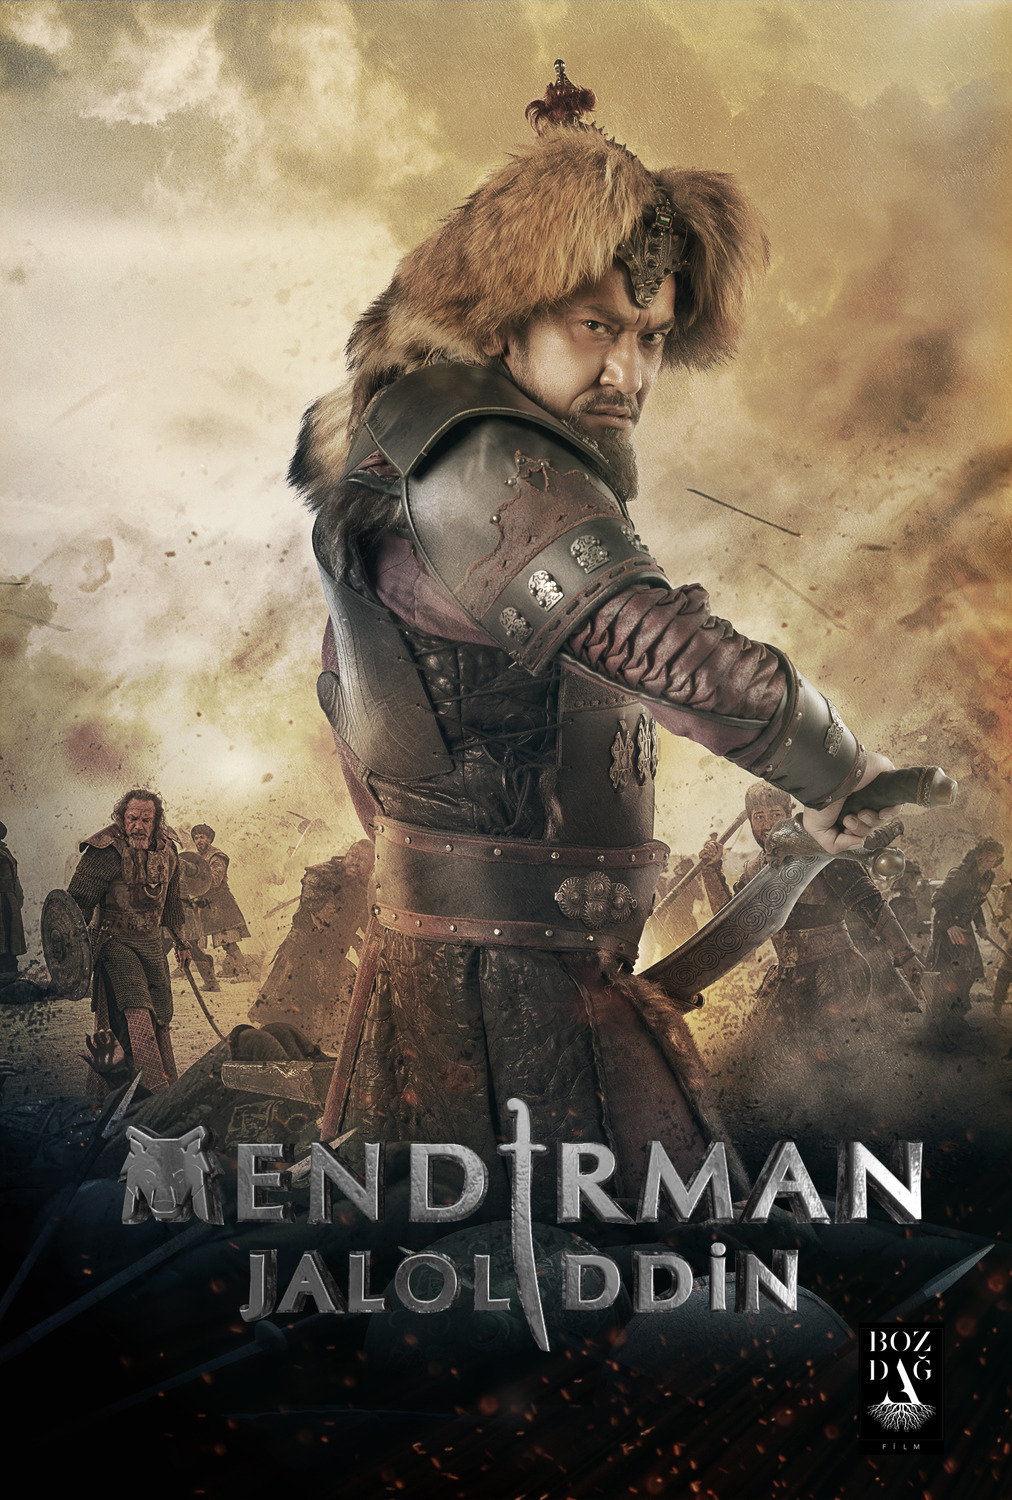 Extra Large TV Poster Image for Mendirman Jaloliddin (#6 of 7)